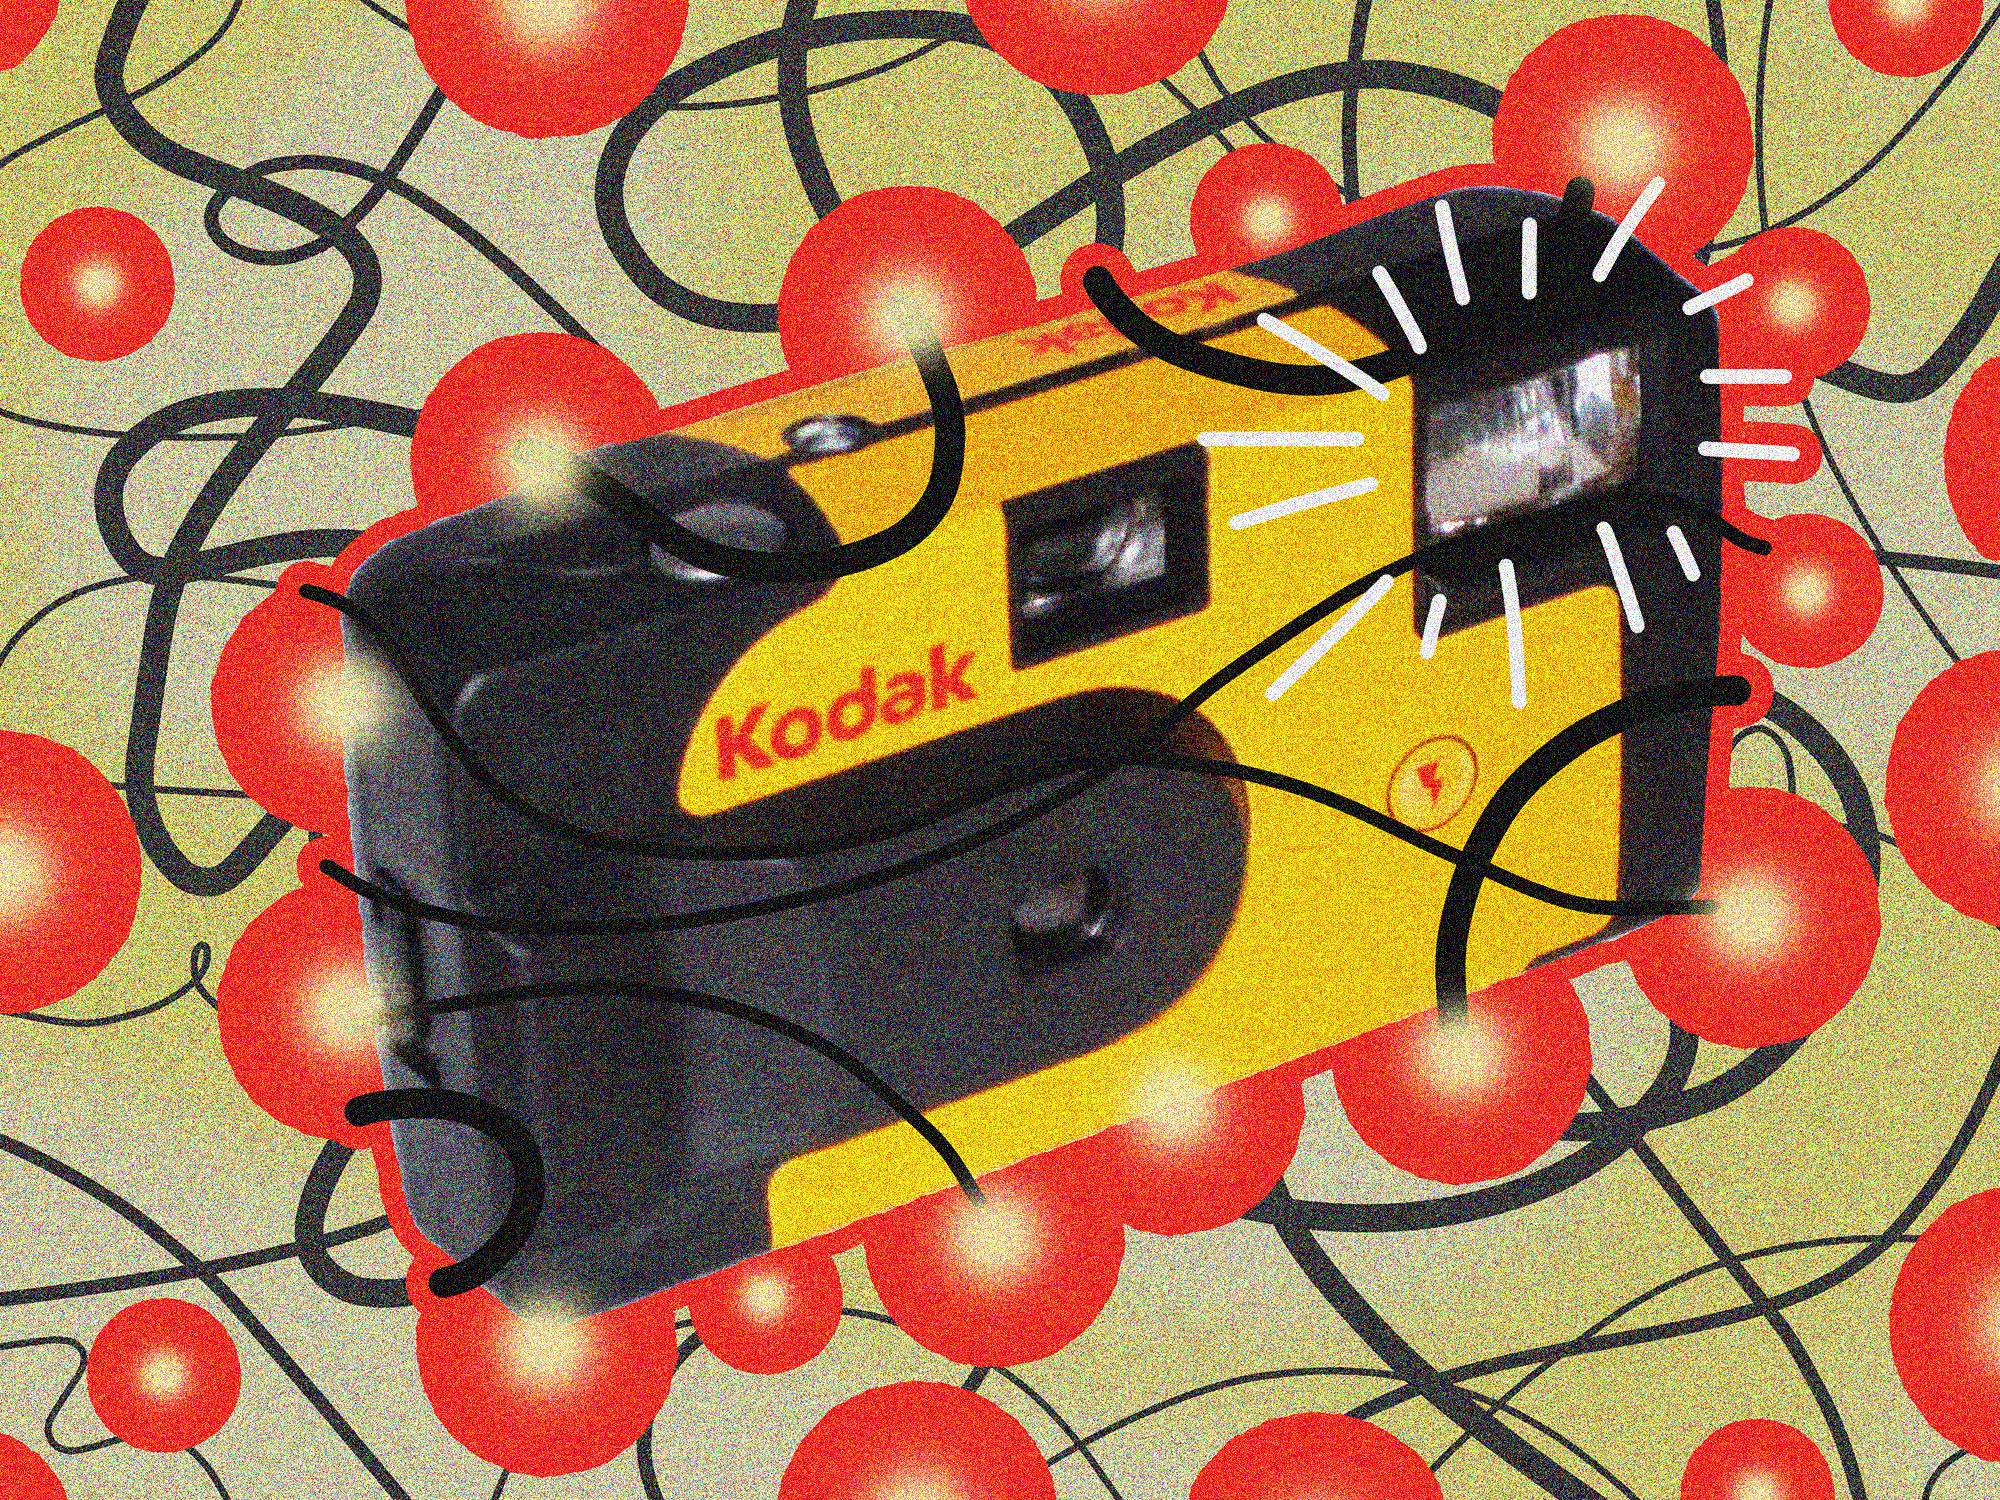 Illustration of a Kodak disposable camera